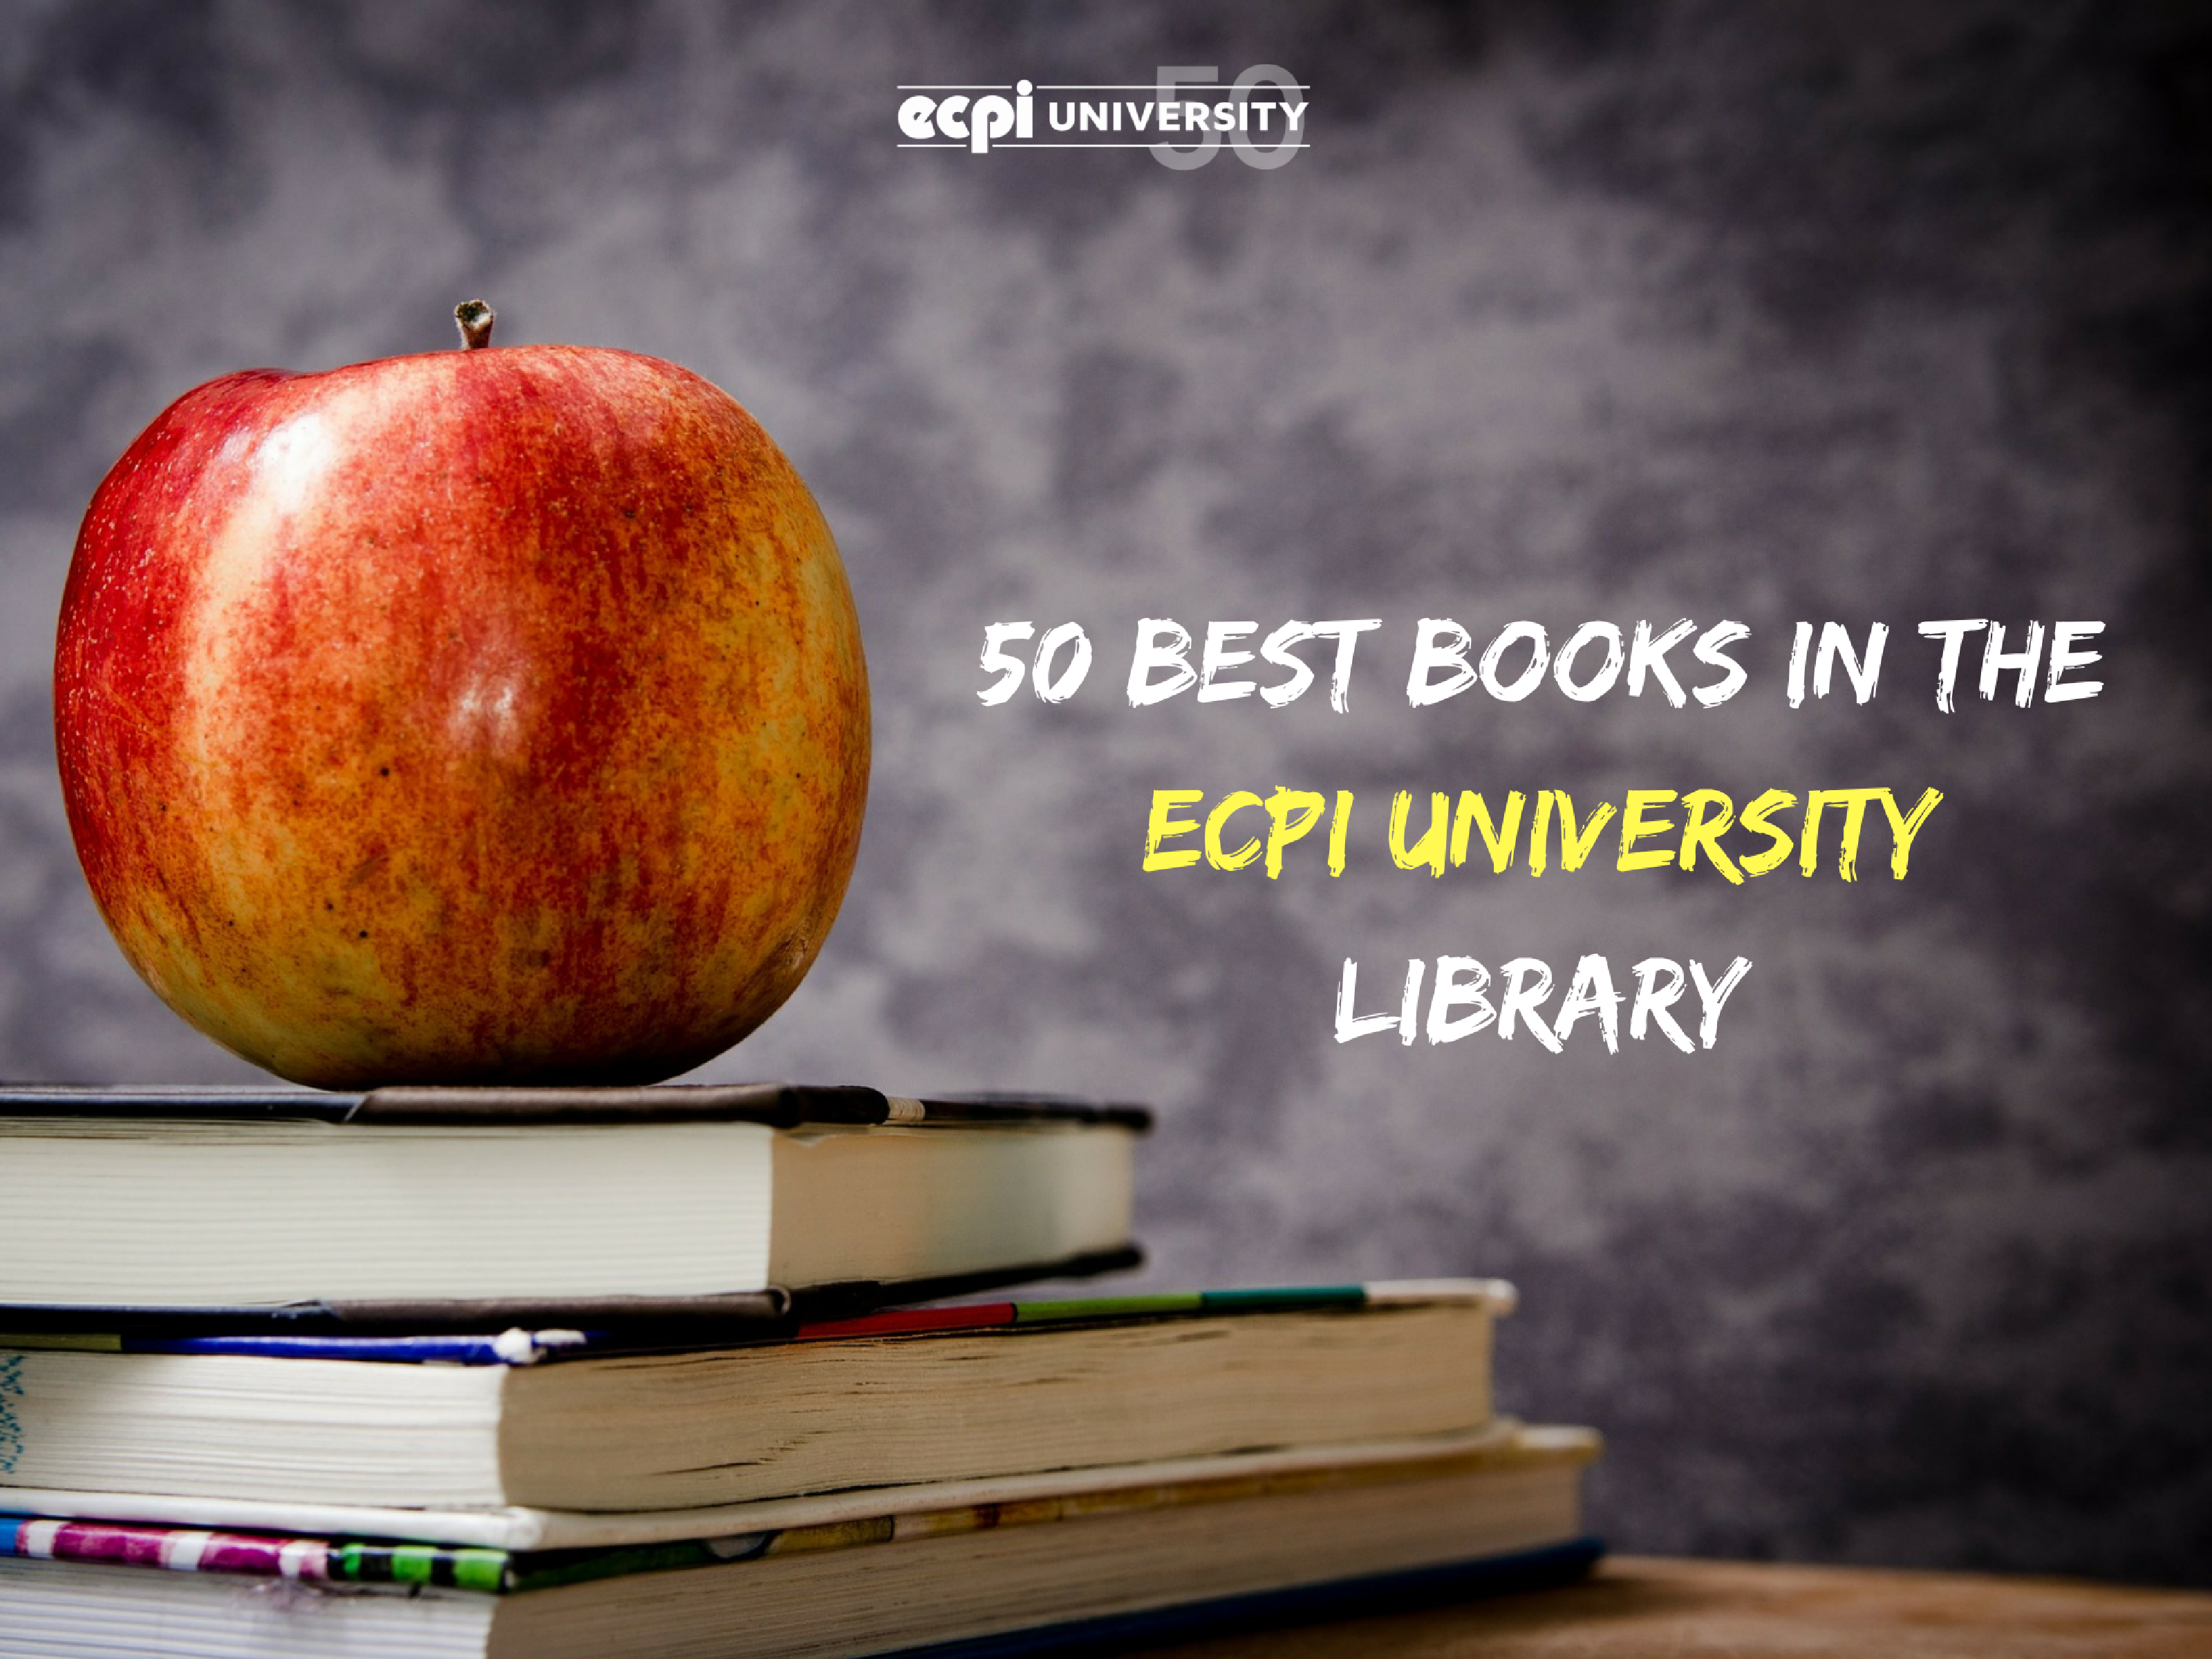 ECPI University Library: Top 50 Books!